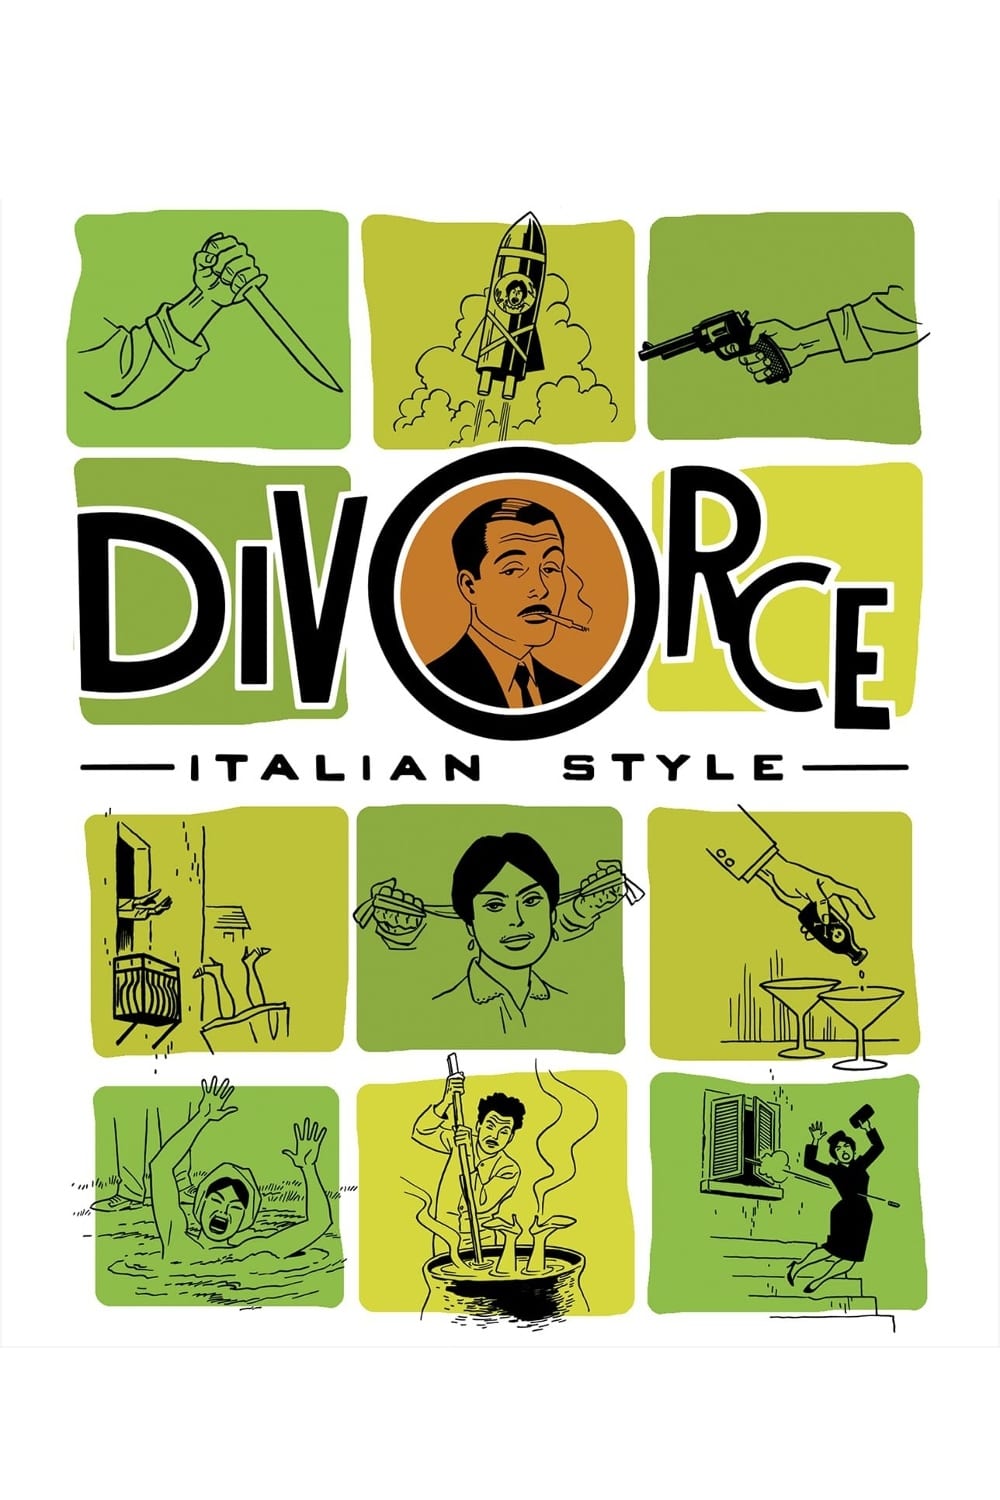 Divorcio a la italiana